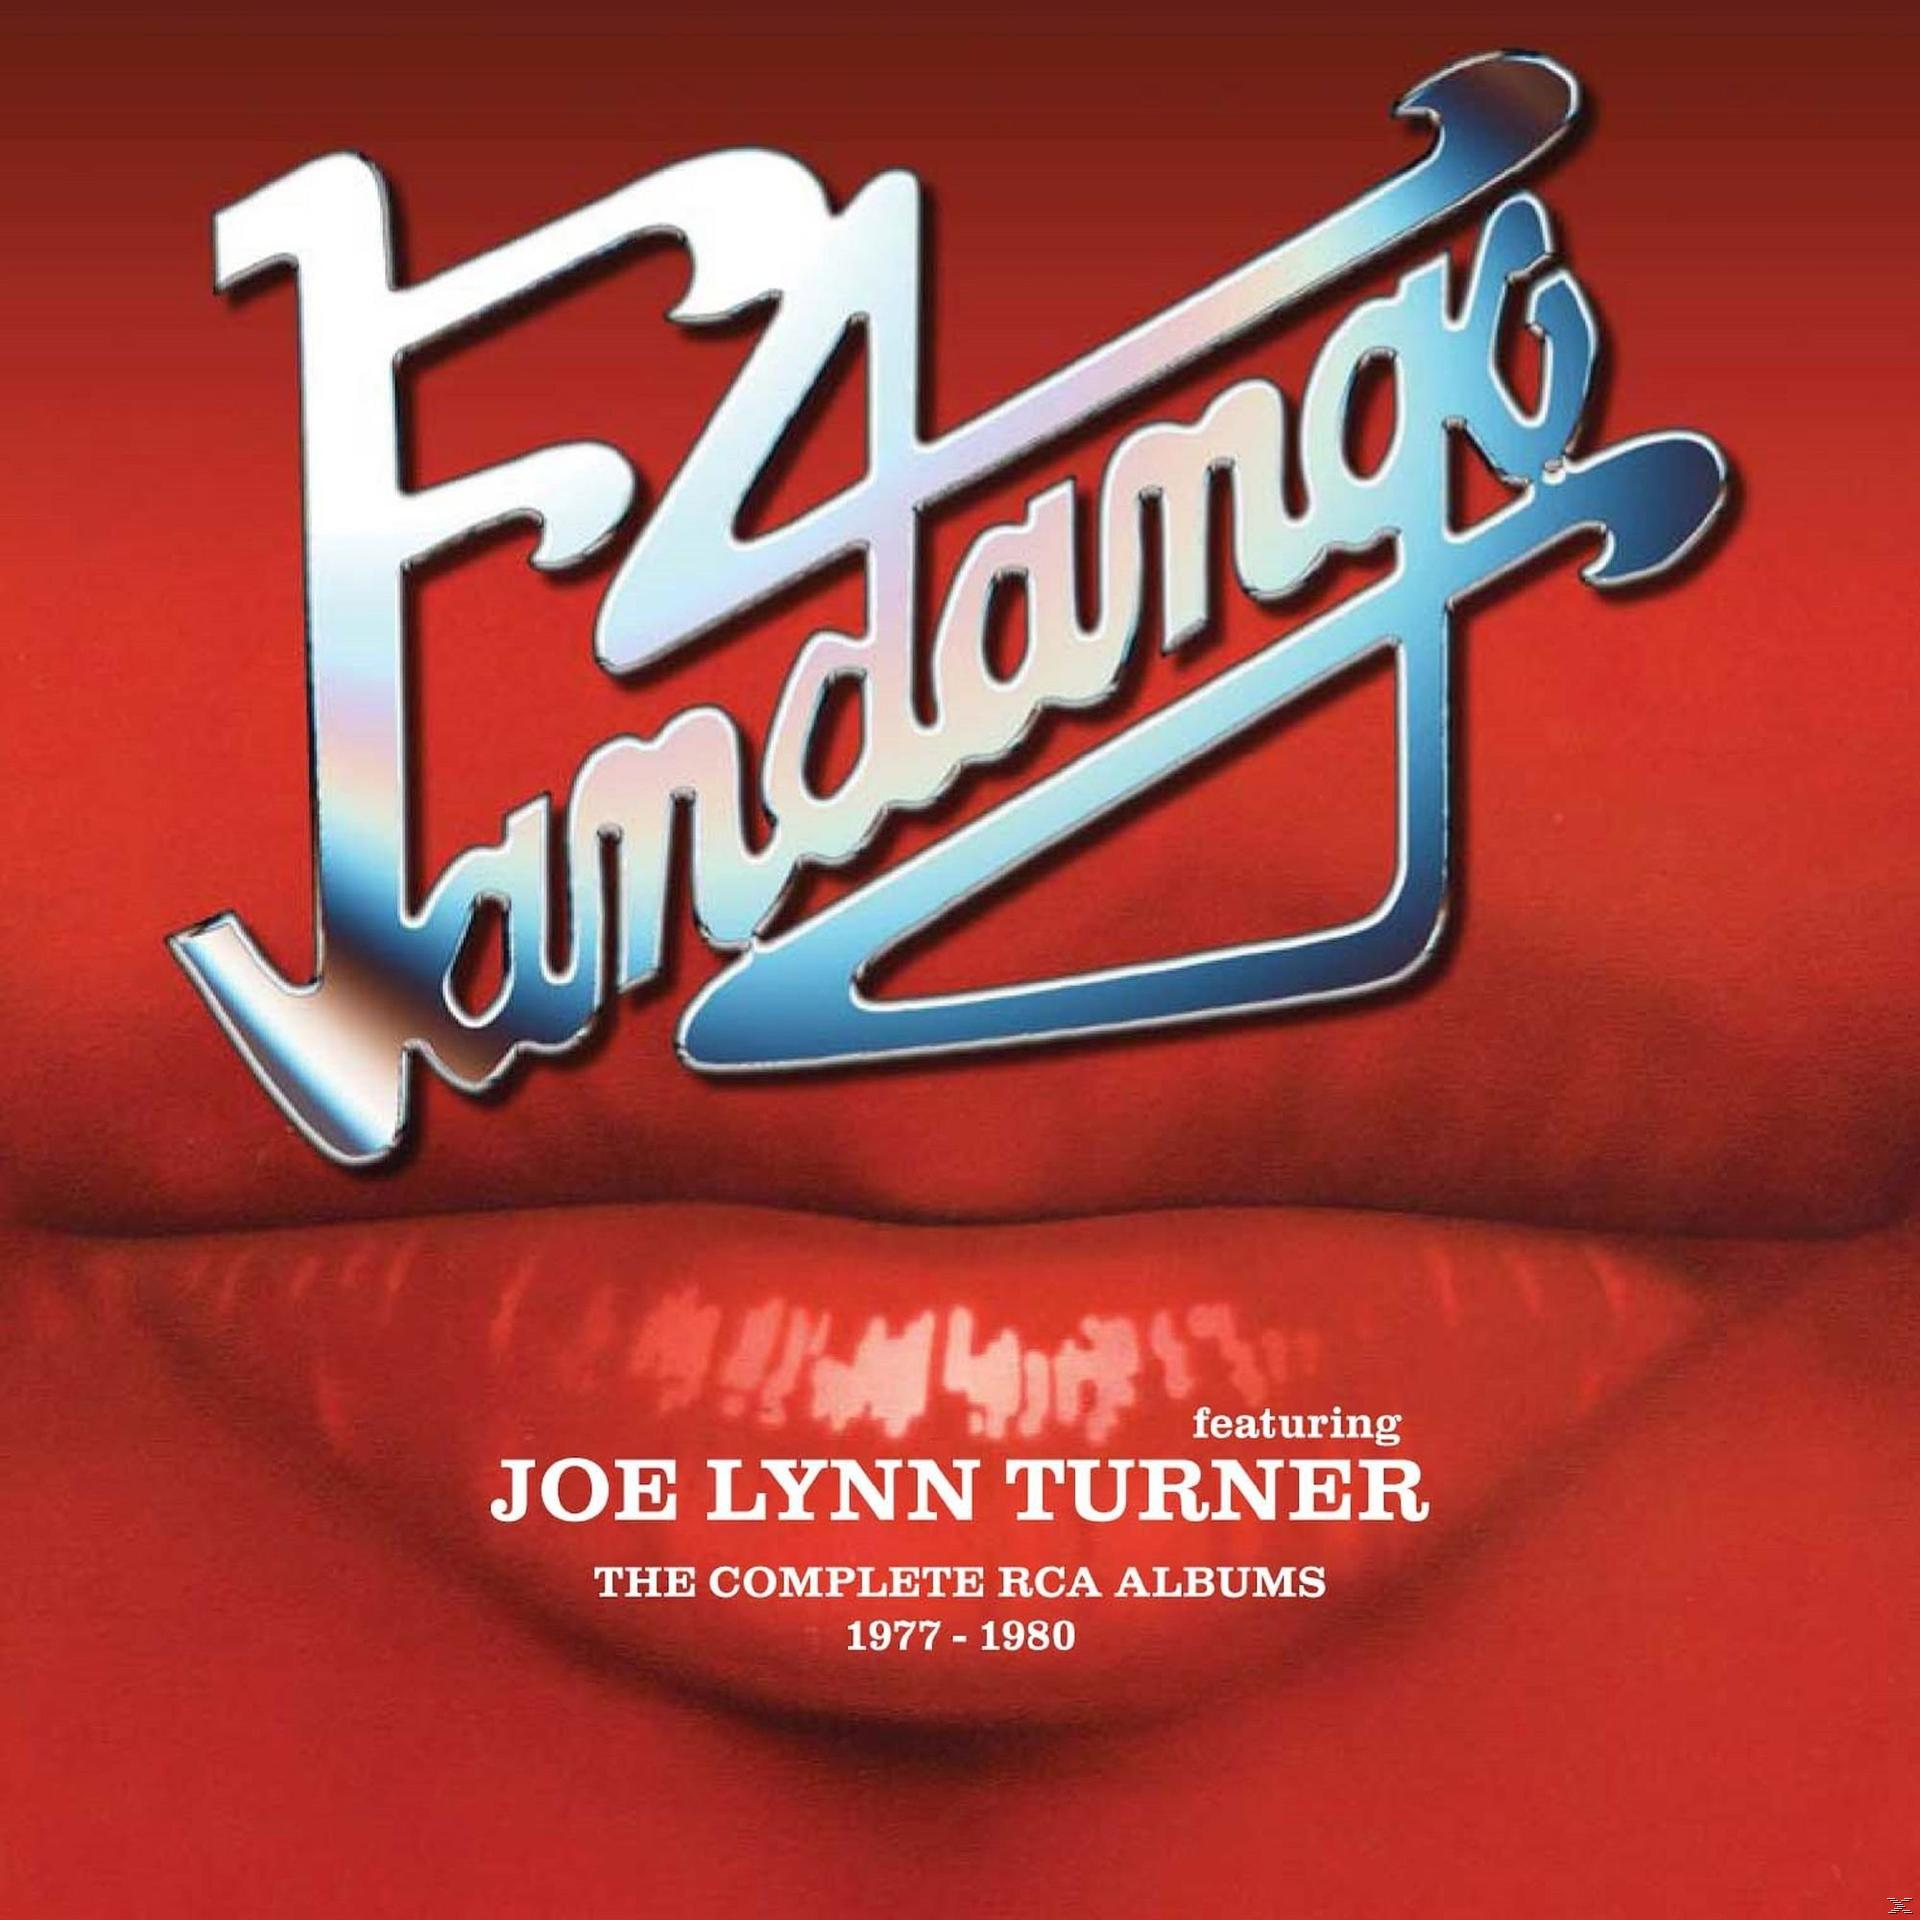 (4 - Set) Albums Box The Complete Turner - Fandango, Joe (CD) 1977-80 Lynn RCA CD